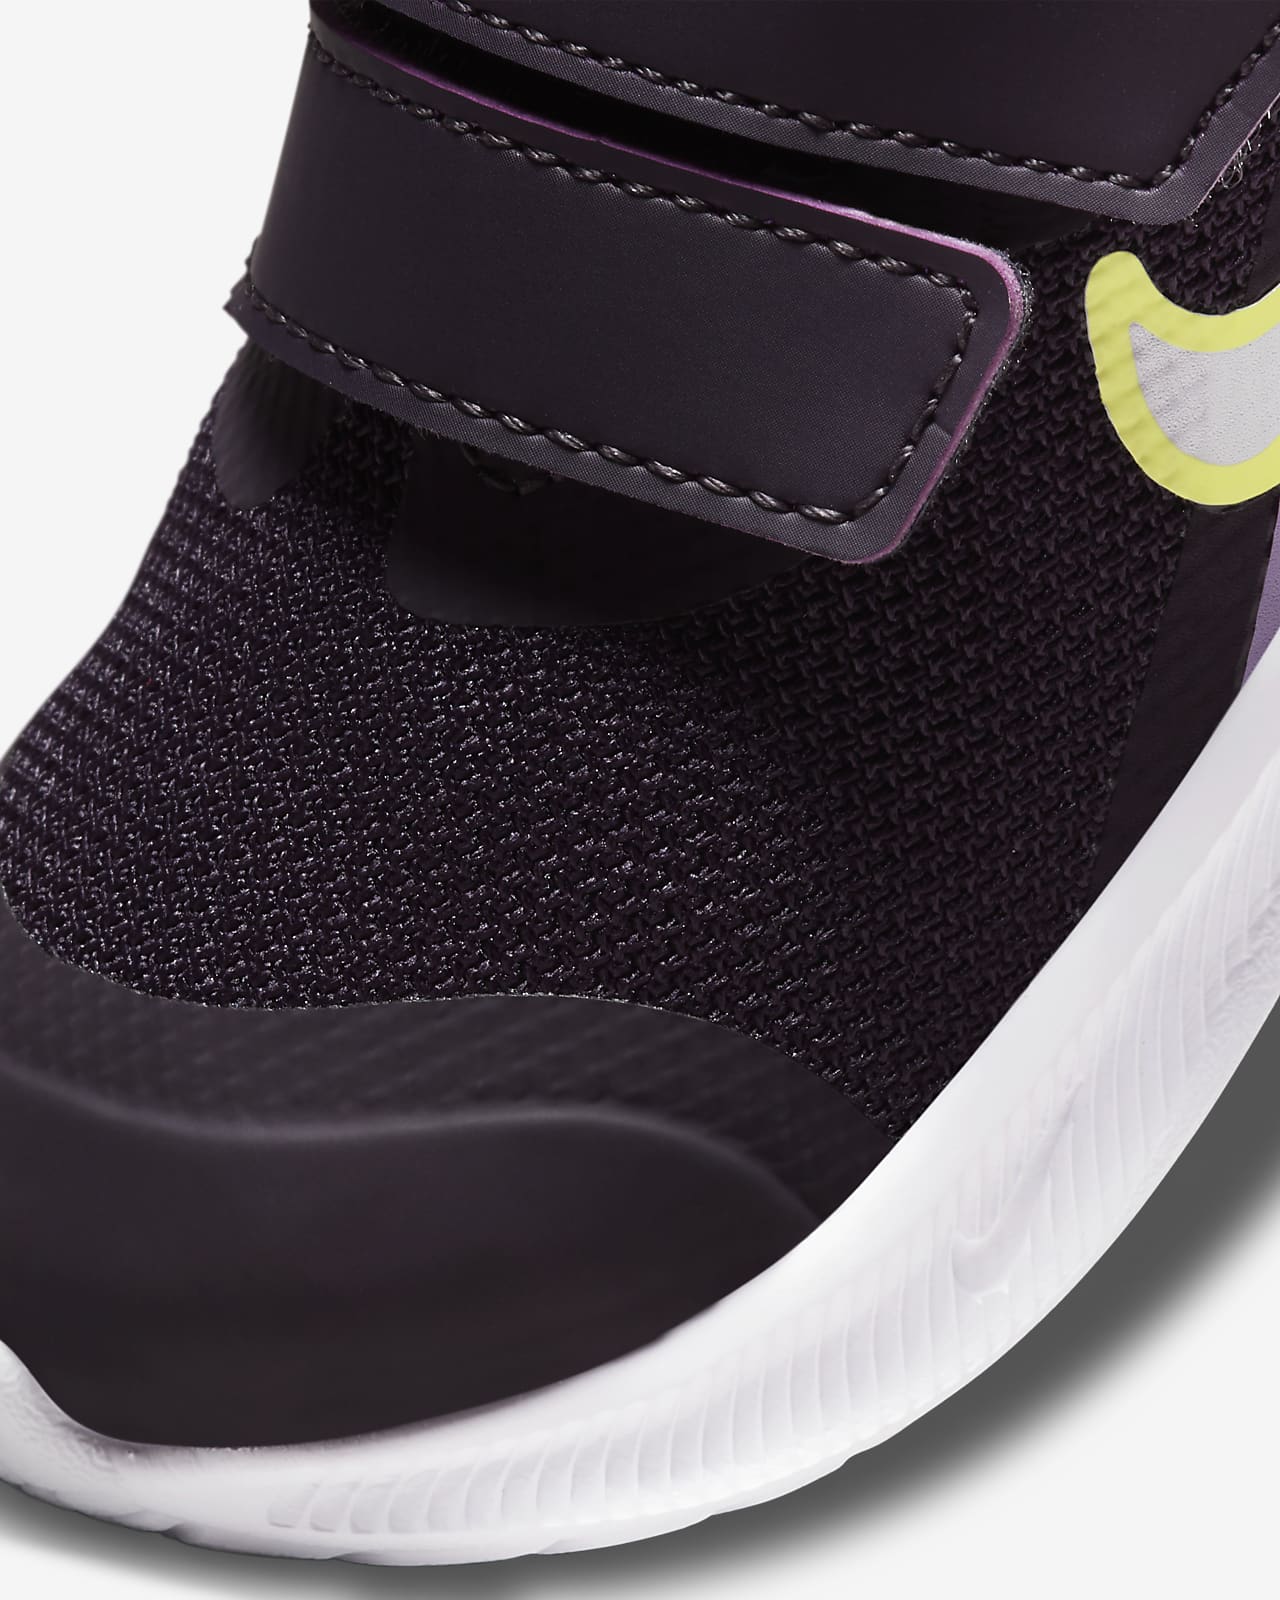 Zapatillas de niño negras Nike Star Runner 3 online en MEGACALZADO